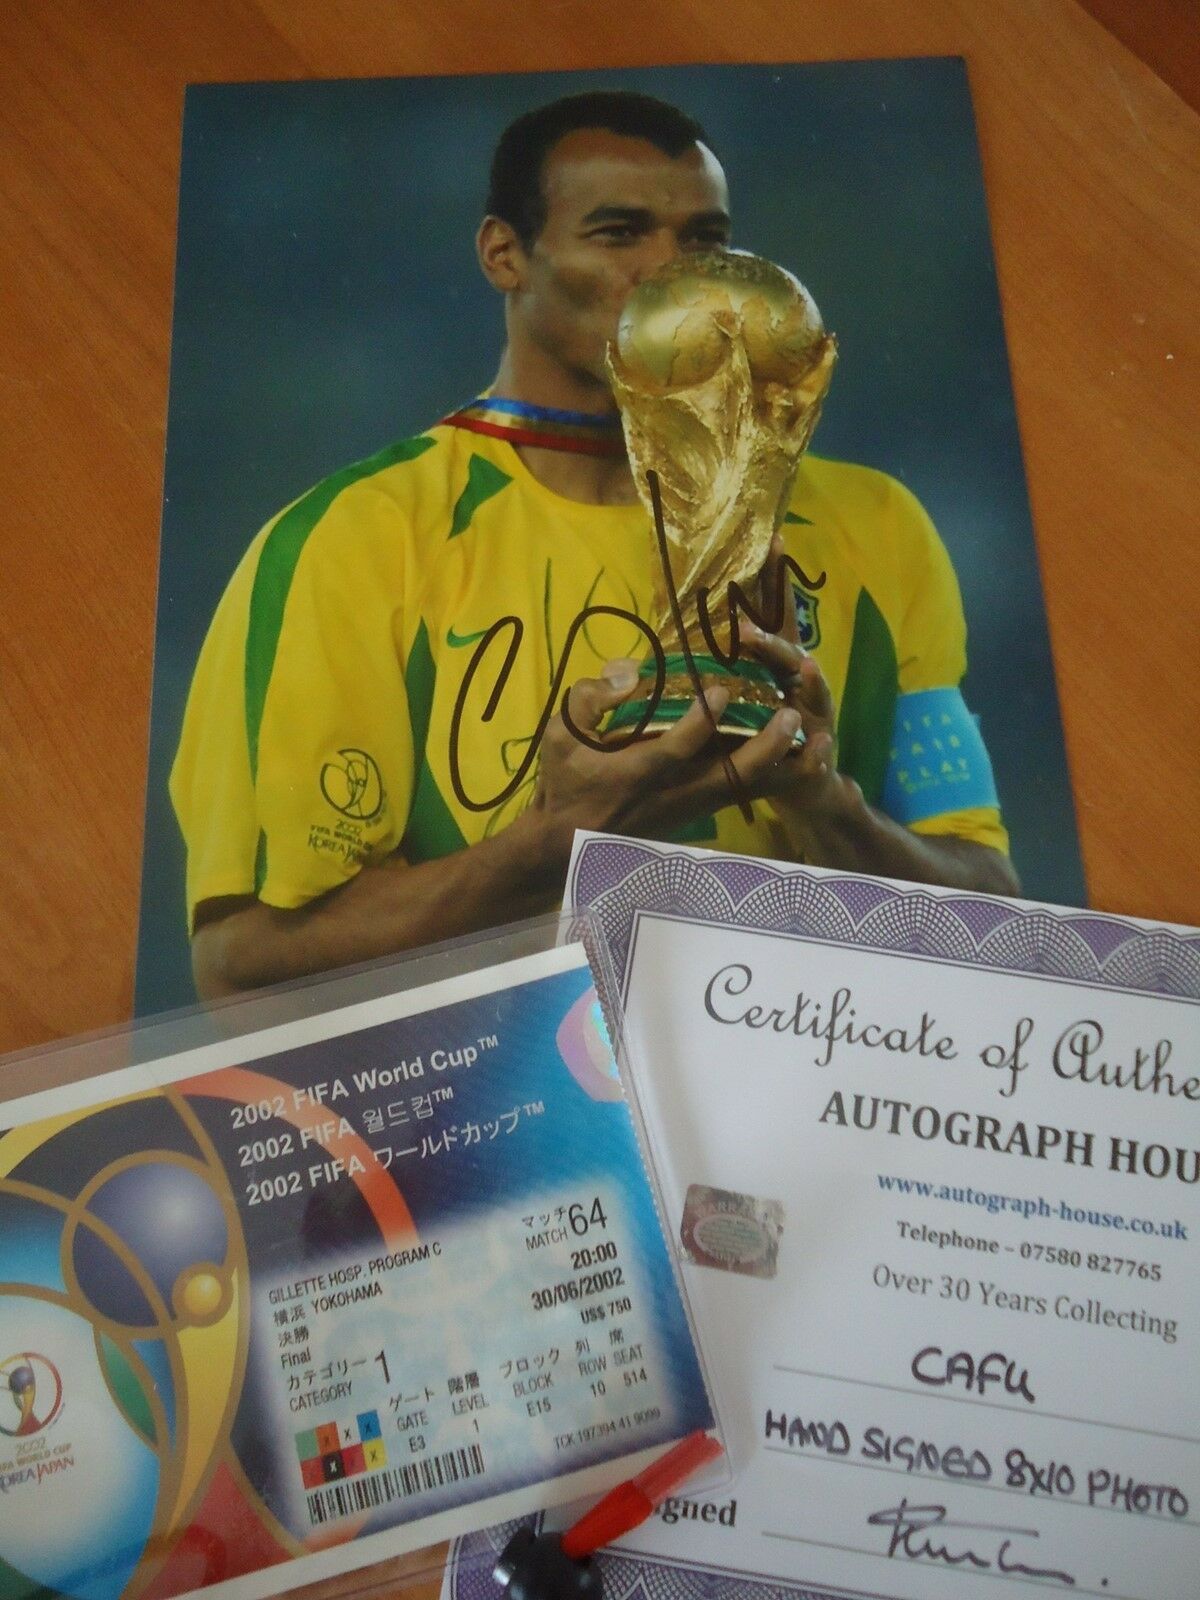 World Cup 2002, Fodbold, Japan / Korea